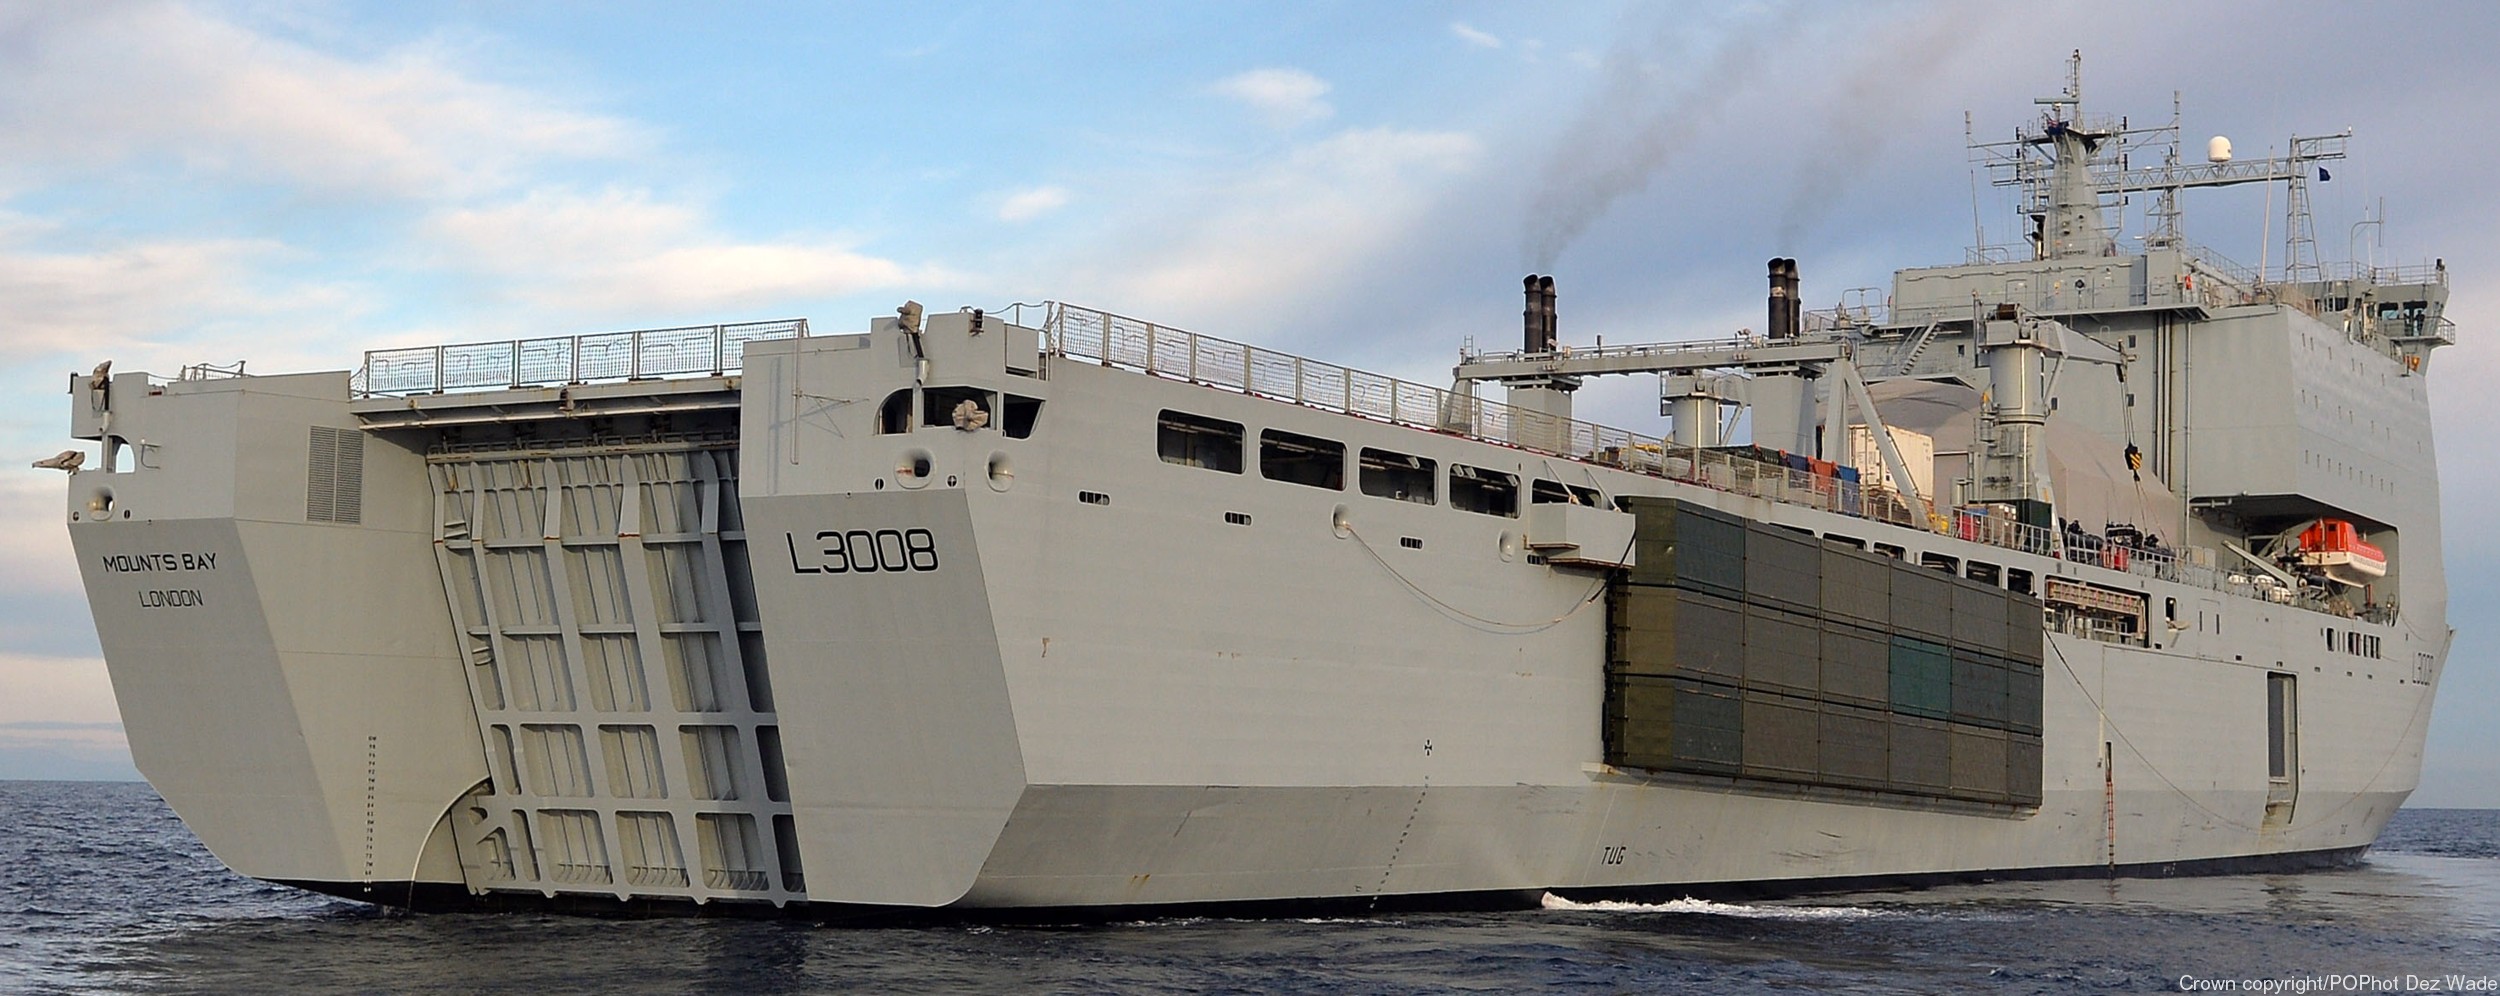 l-3008 rfa mounts bay dock landing ship lsd royal fleet auxilary navy 16